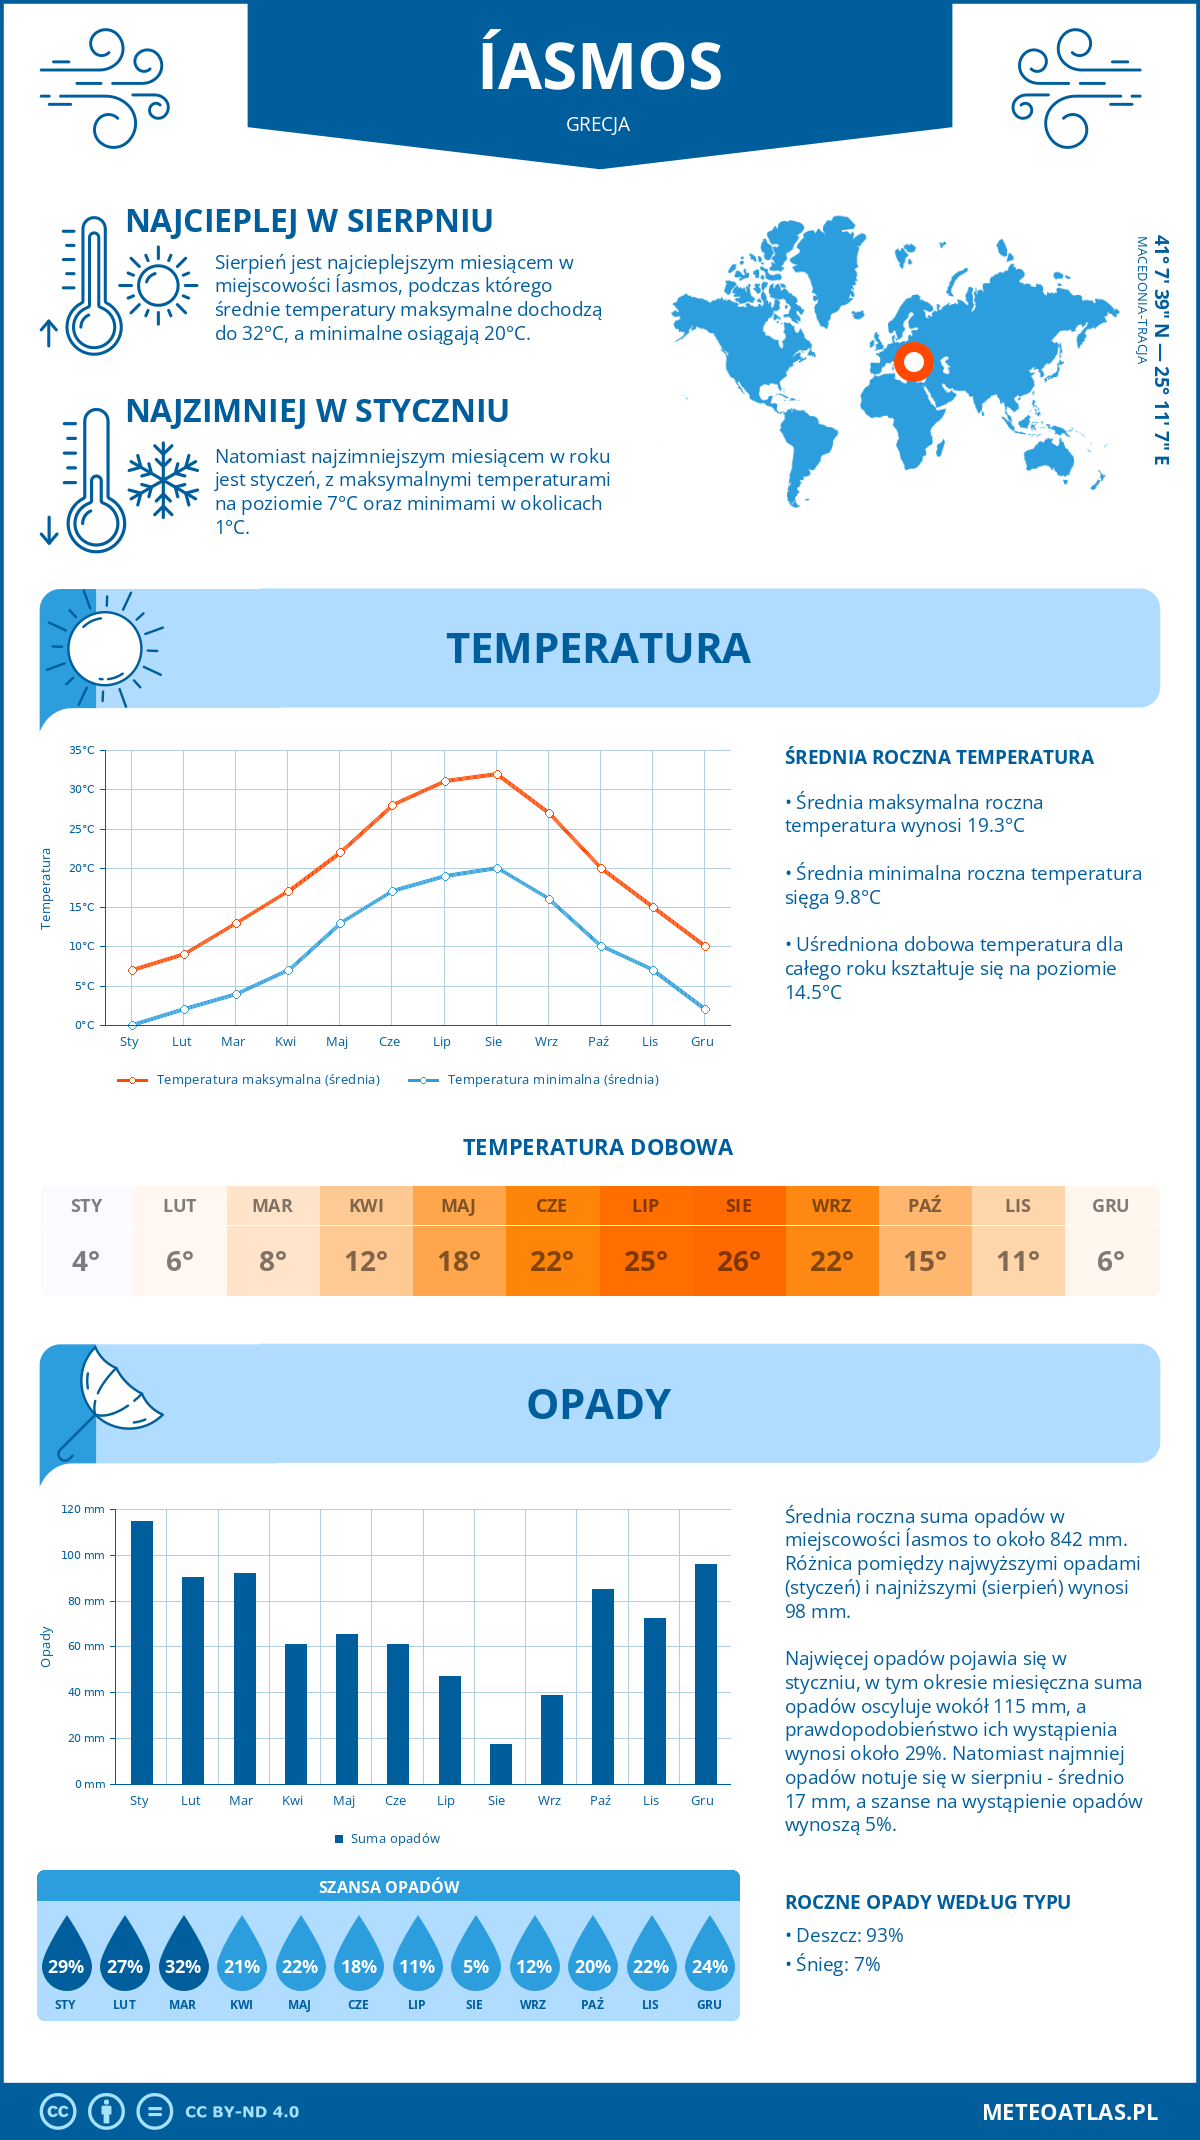 Pogoda Jasmos (Grecja). Temperatura oraz opady.